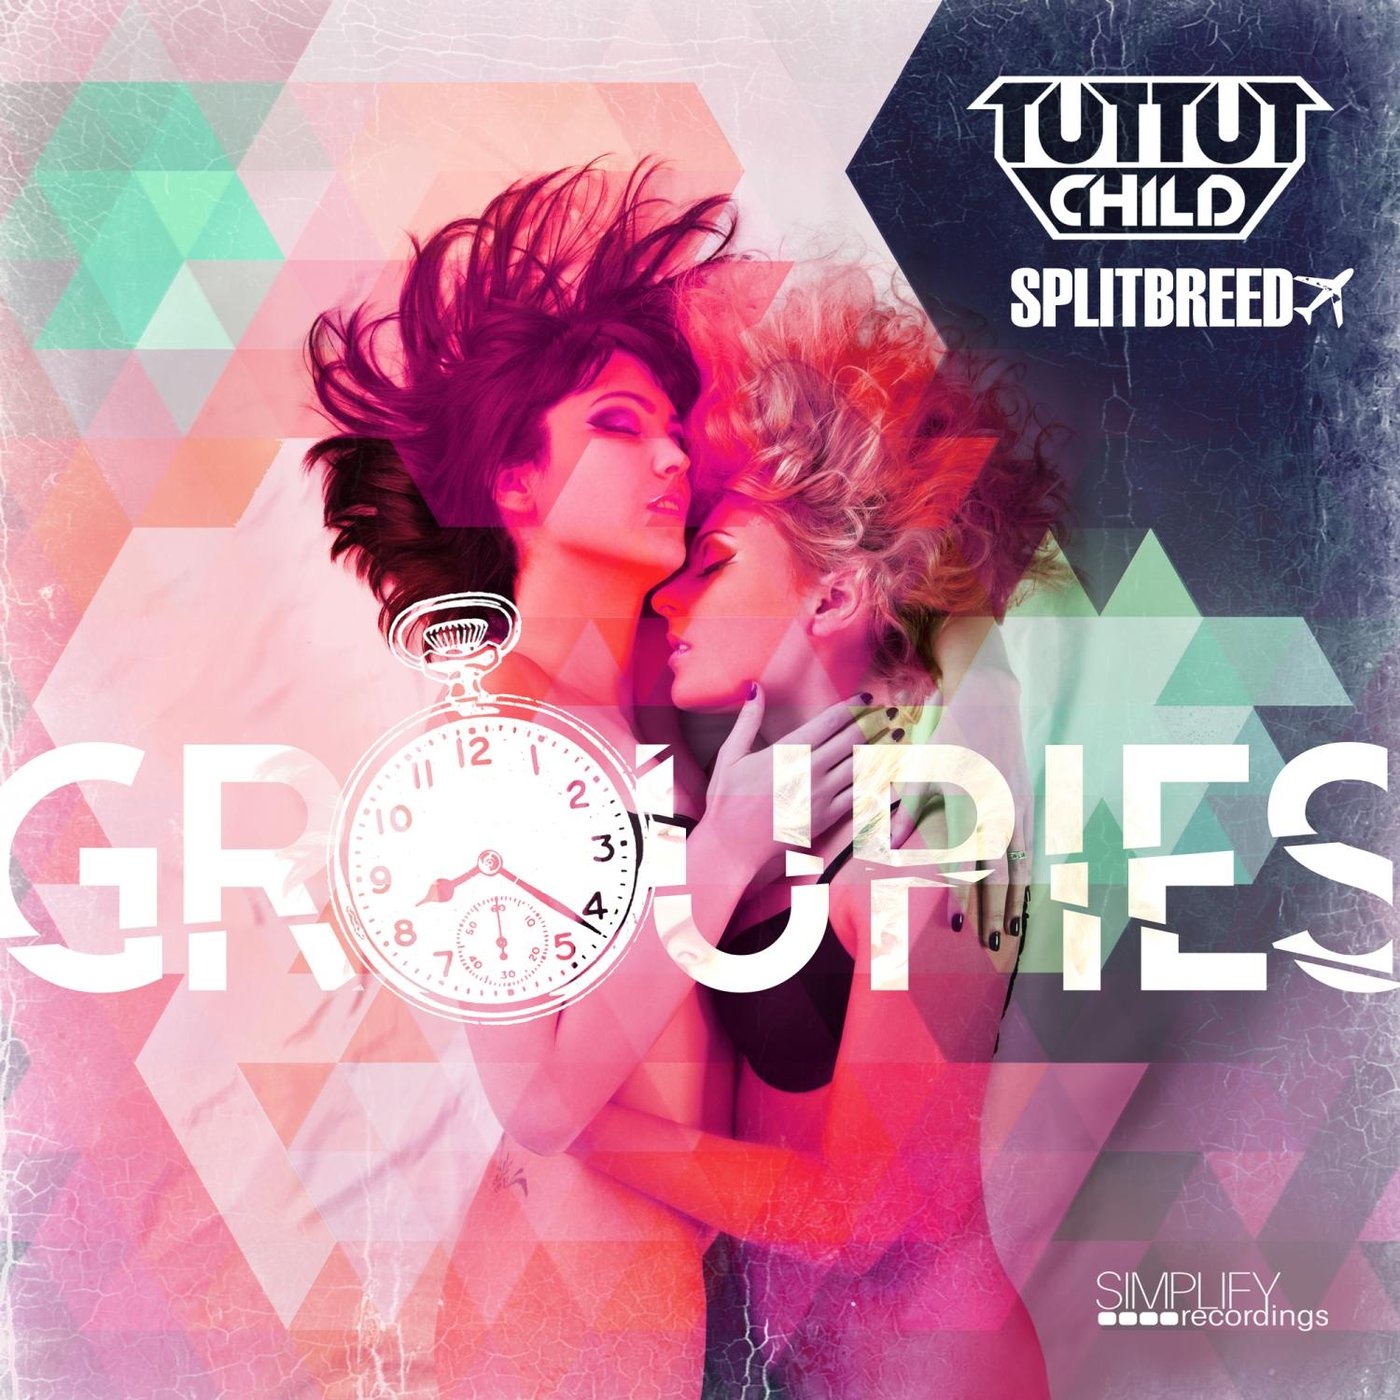 Groupies (feat. Splitbreed)